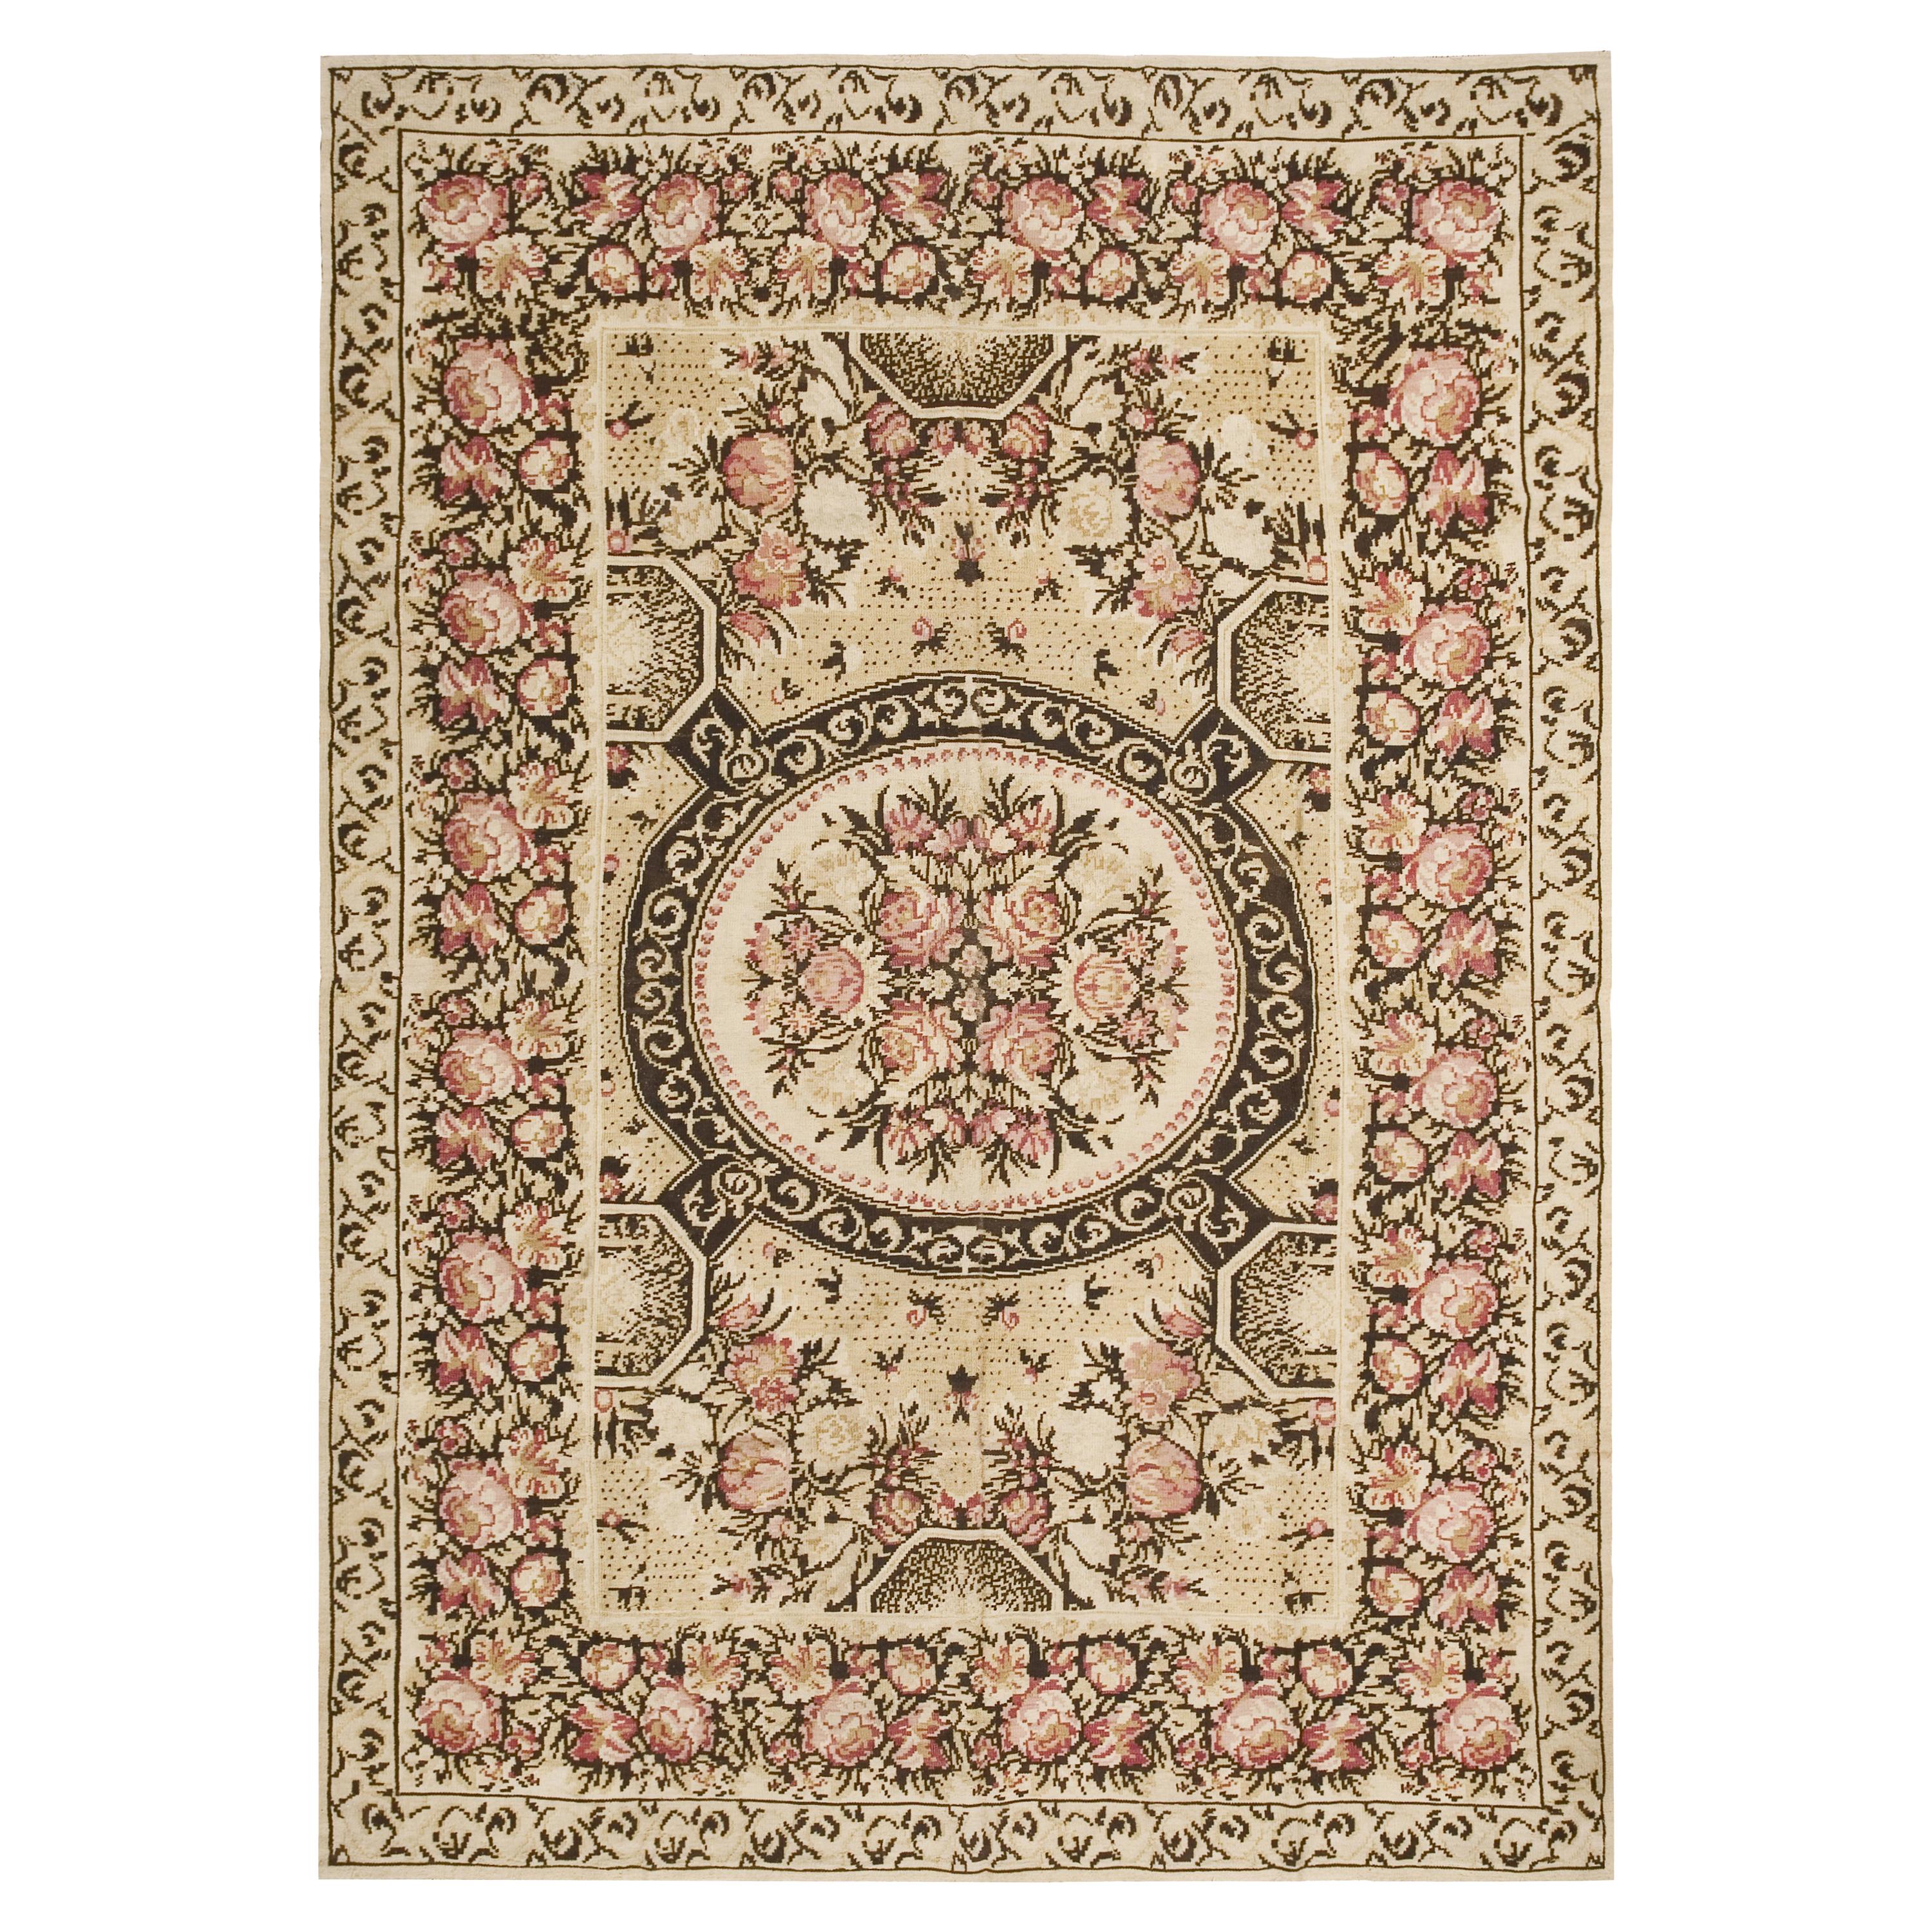 Mid 19th Century Besserabian Flat-Weave Carpet ( 7'6" x 10'6"- 228 x 320 )